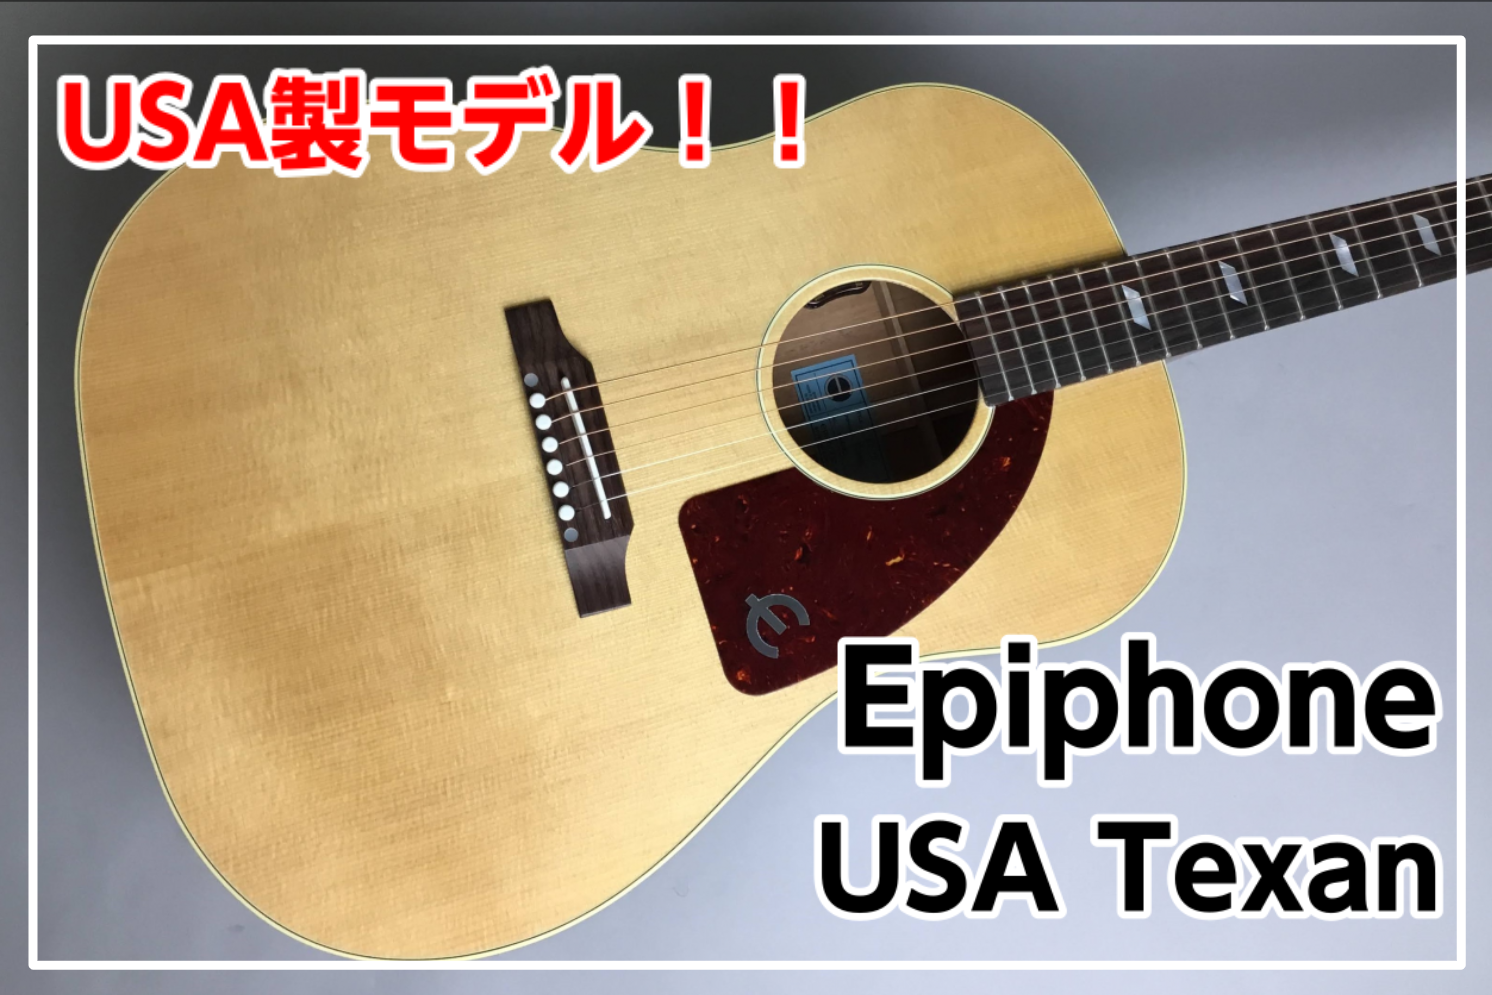 Epiphone USA Texan 入荷！！　USA製エピフォン テキサン！！